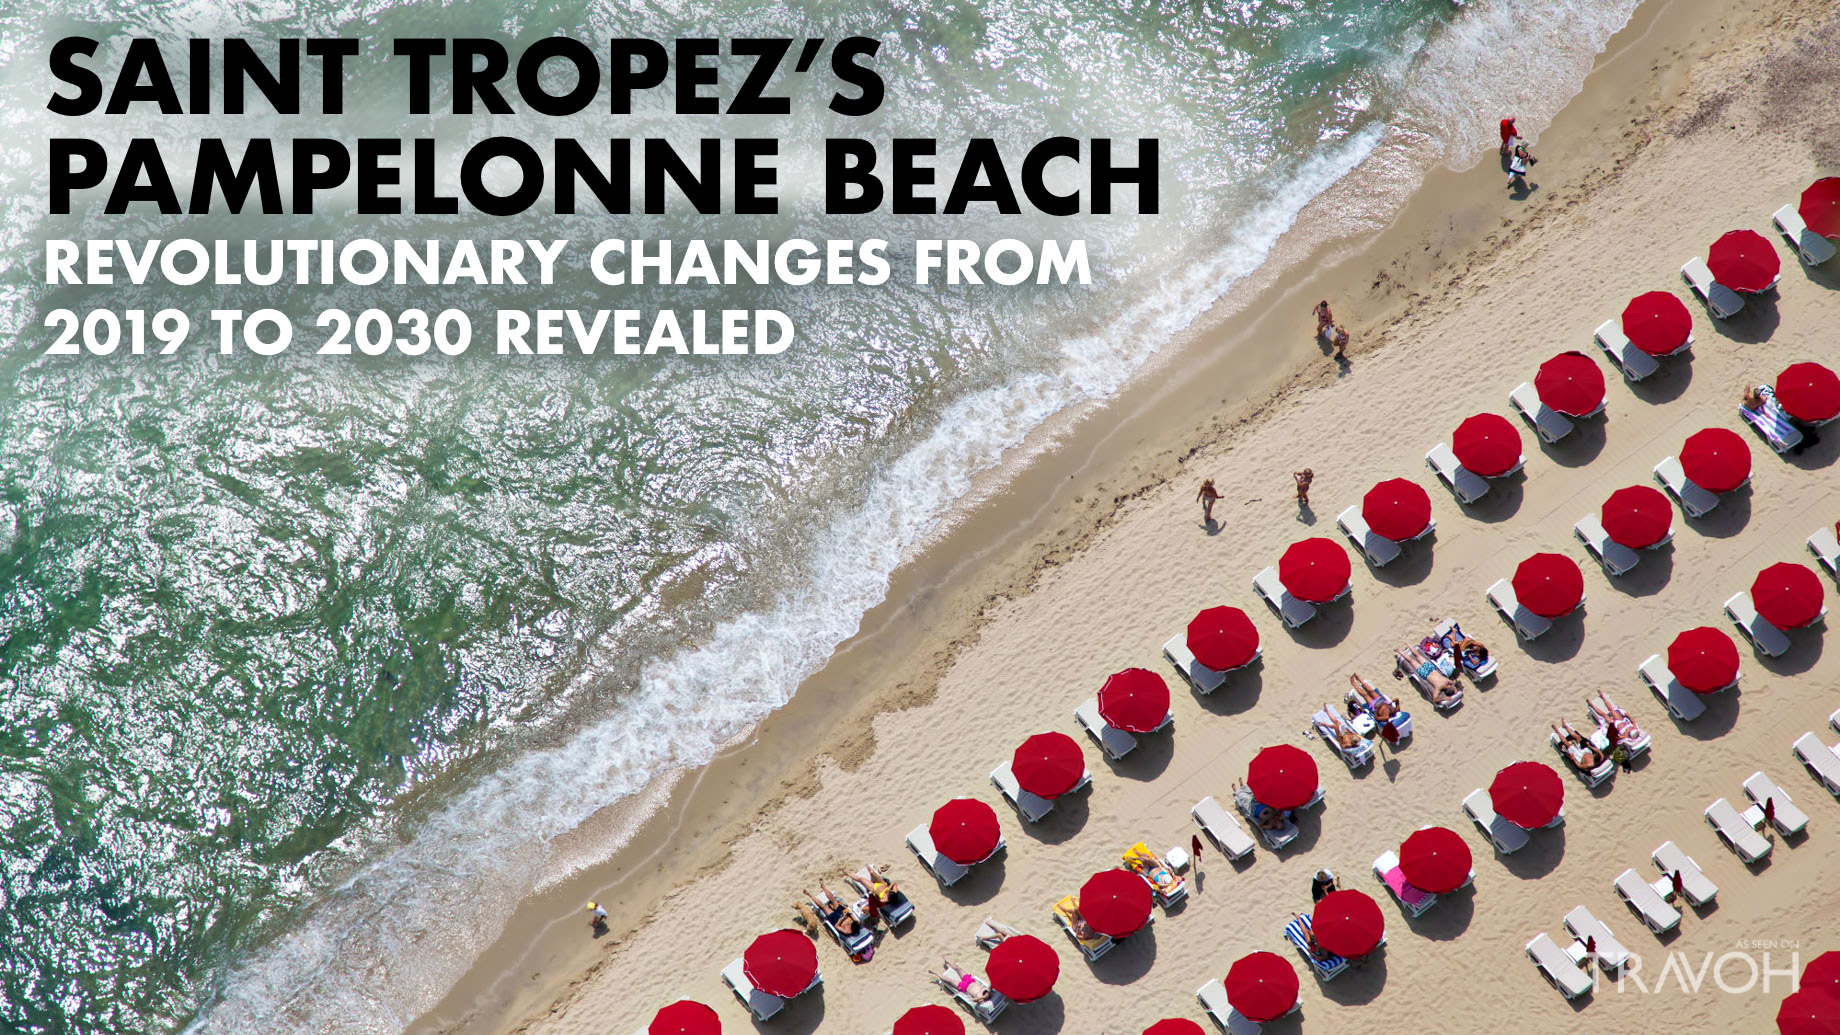 Saint-Tropez’s Pampelonne Beach - Revolutionary Changes to 2030 Revealed